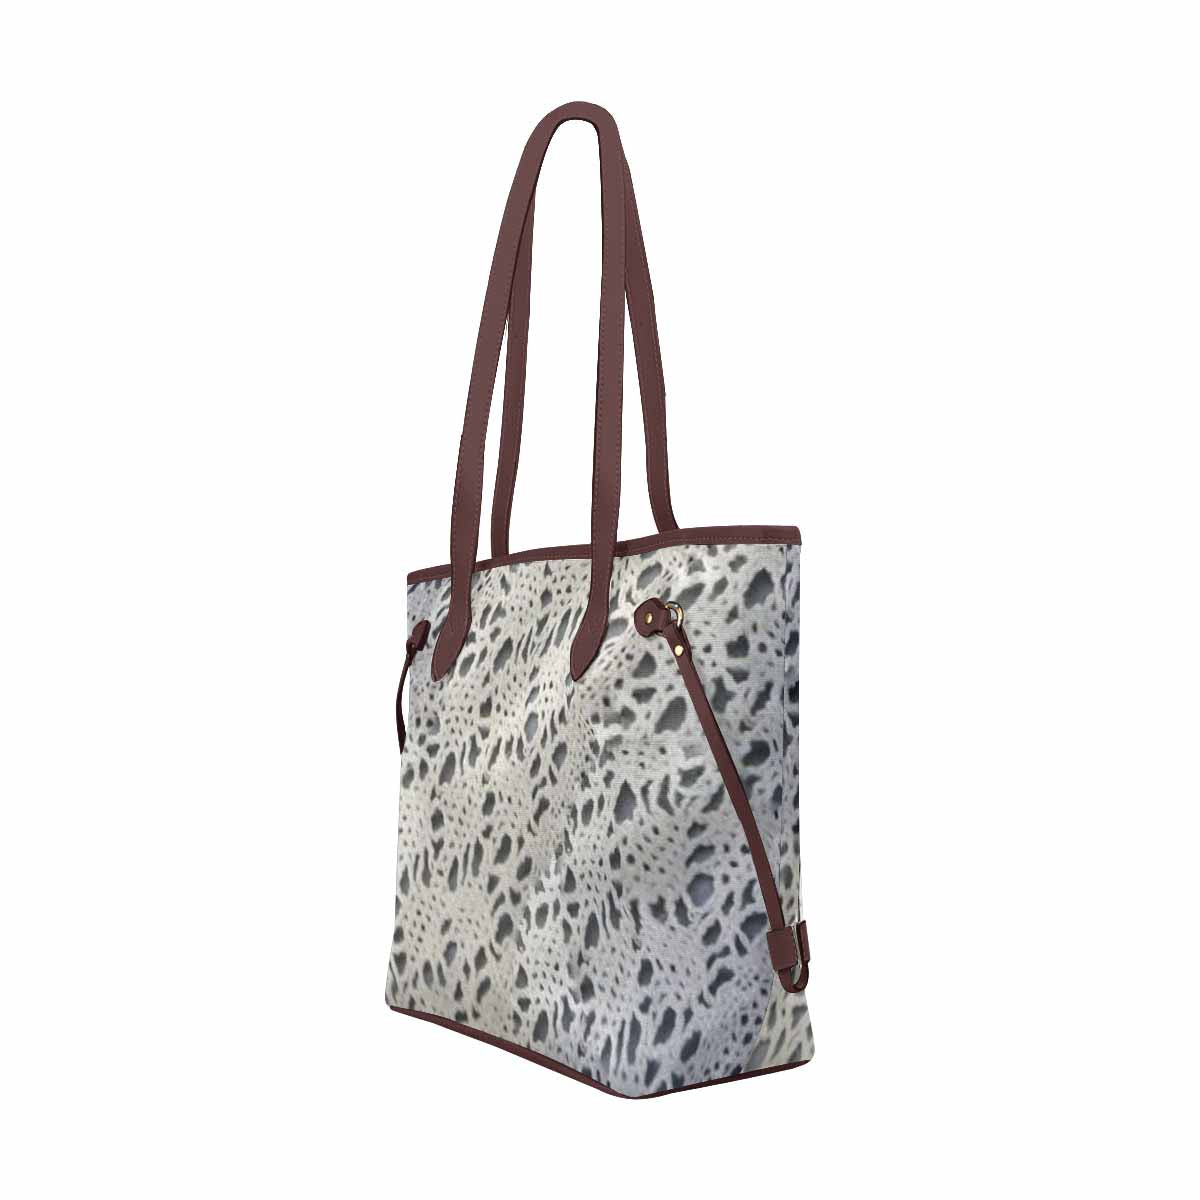 Victorian printed lace handbag, MODEL 1695361 Design 12